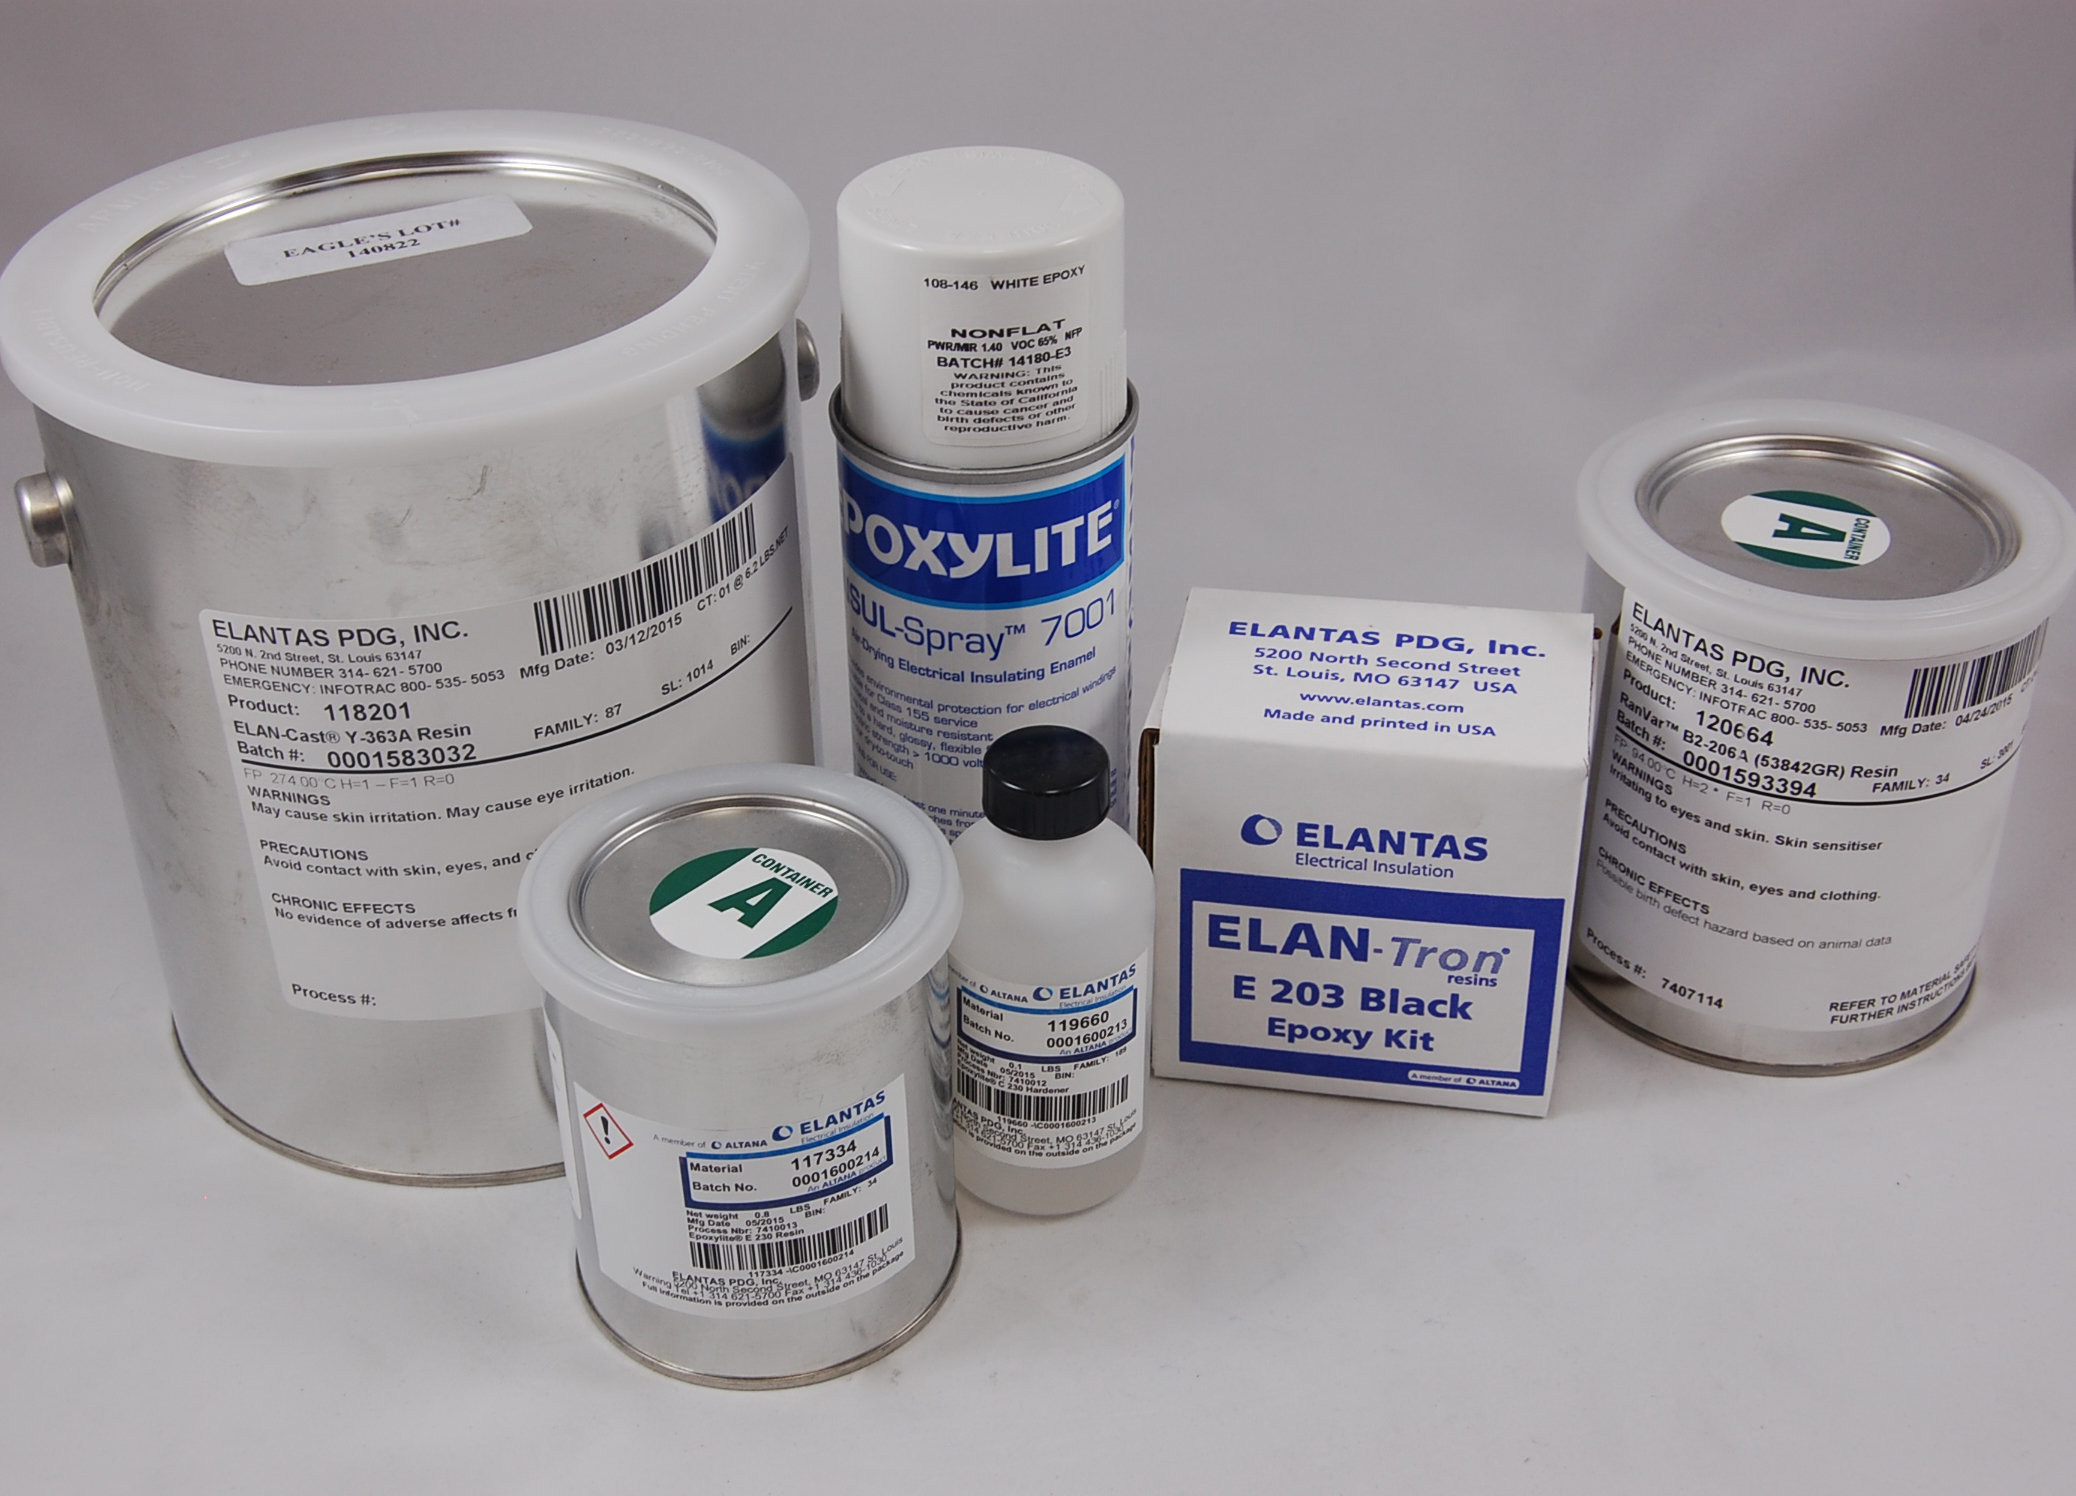 ELAN-Guard EM 59-60MR Waterborne Hermetic Epoxy Impregnating Resin 200°C, opaque white, 5 GALLON pail (40 lb)